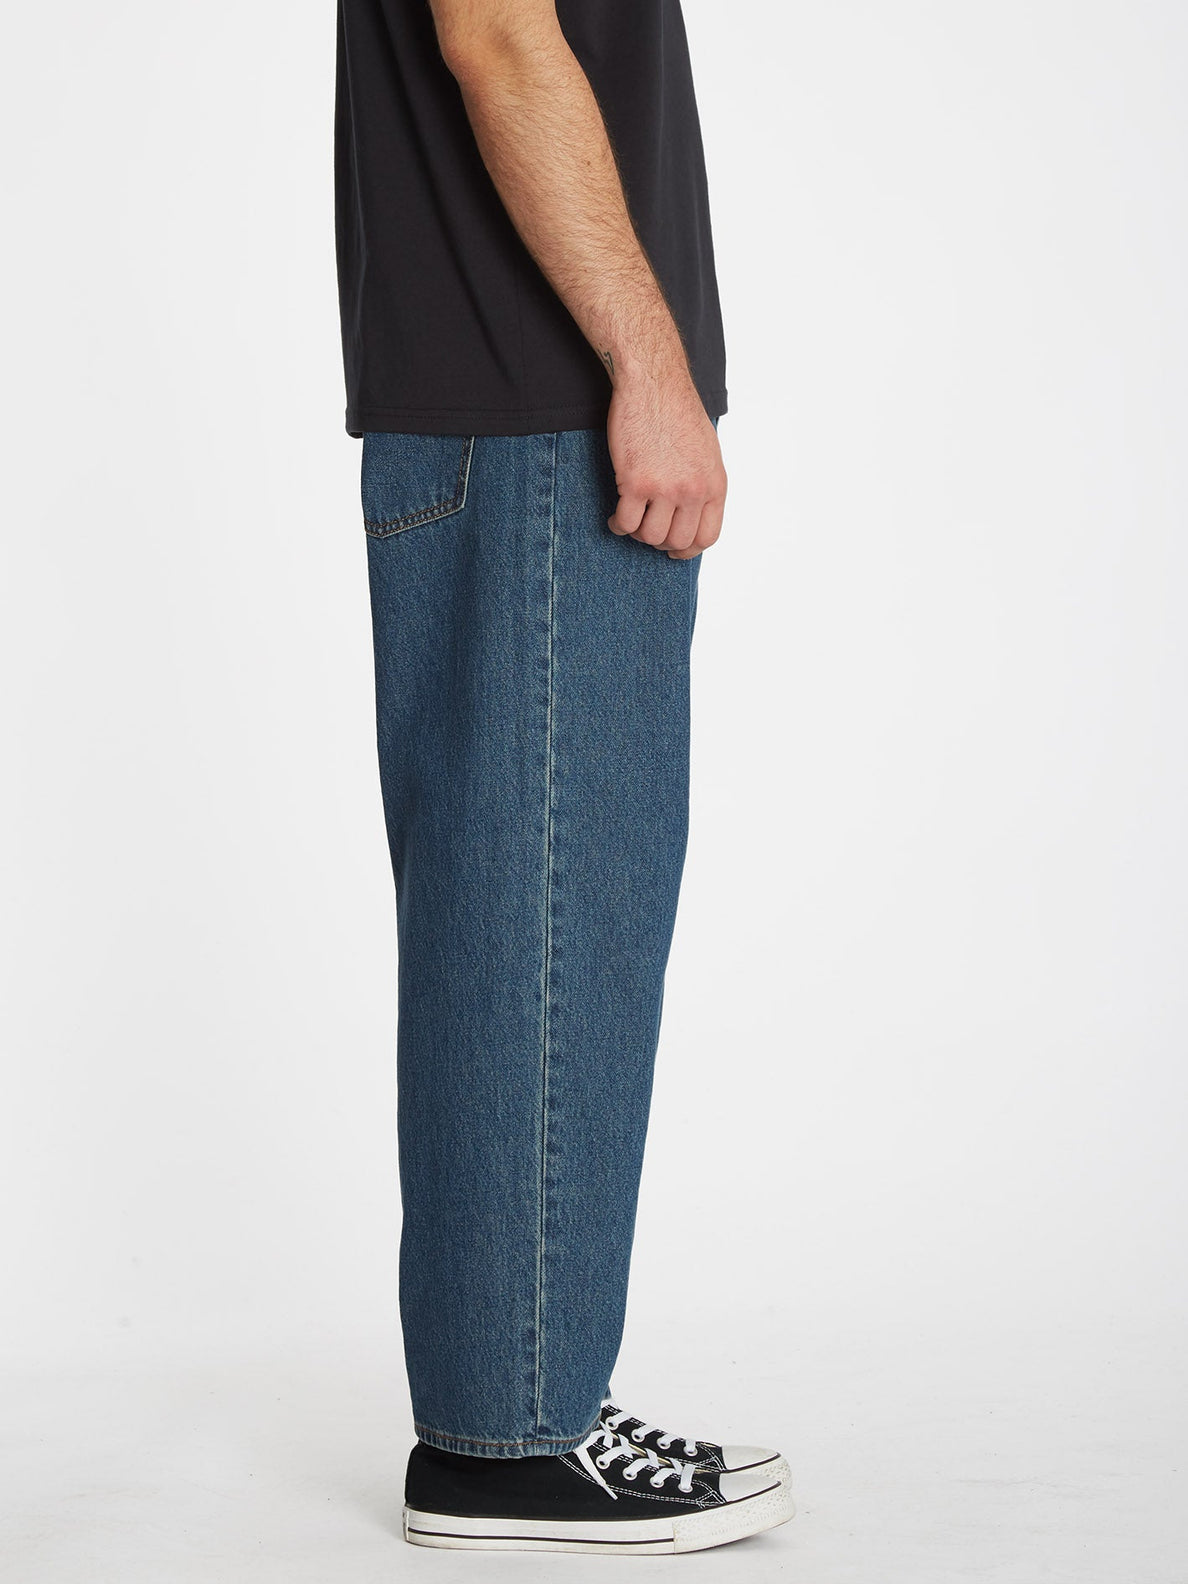 Billow Tapered Jeans - INDIGO RIDGE WASH (A1912301_IRW) [3]